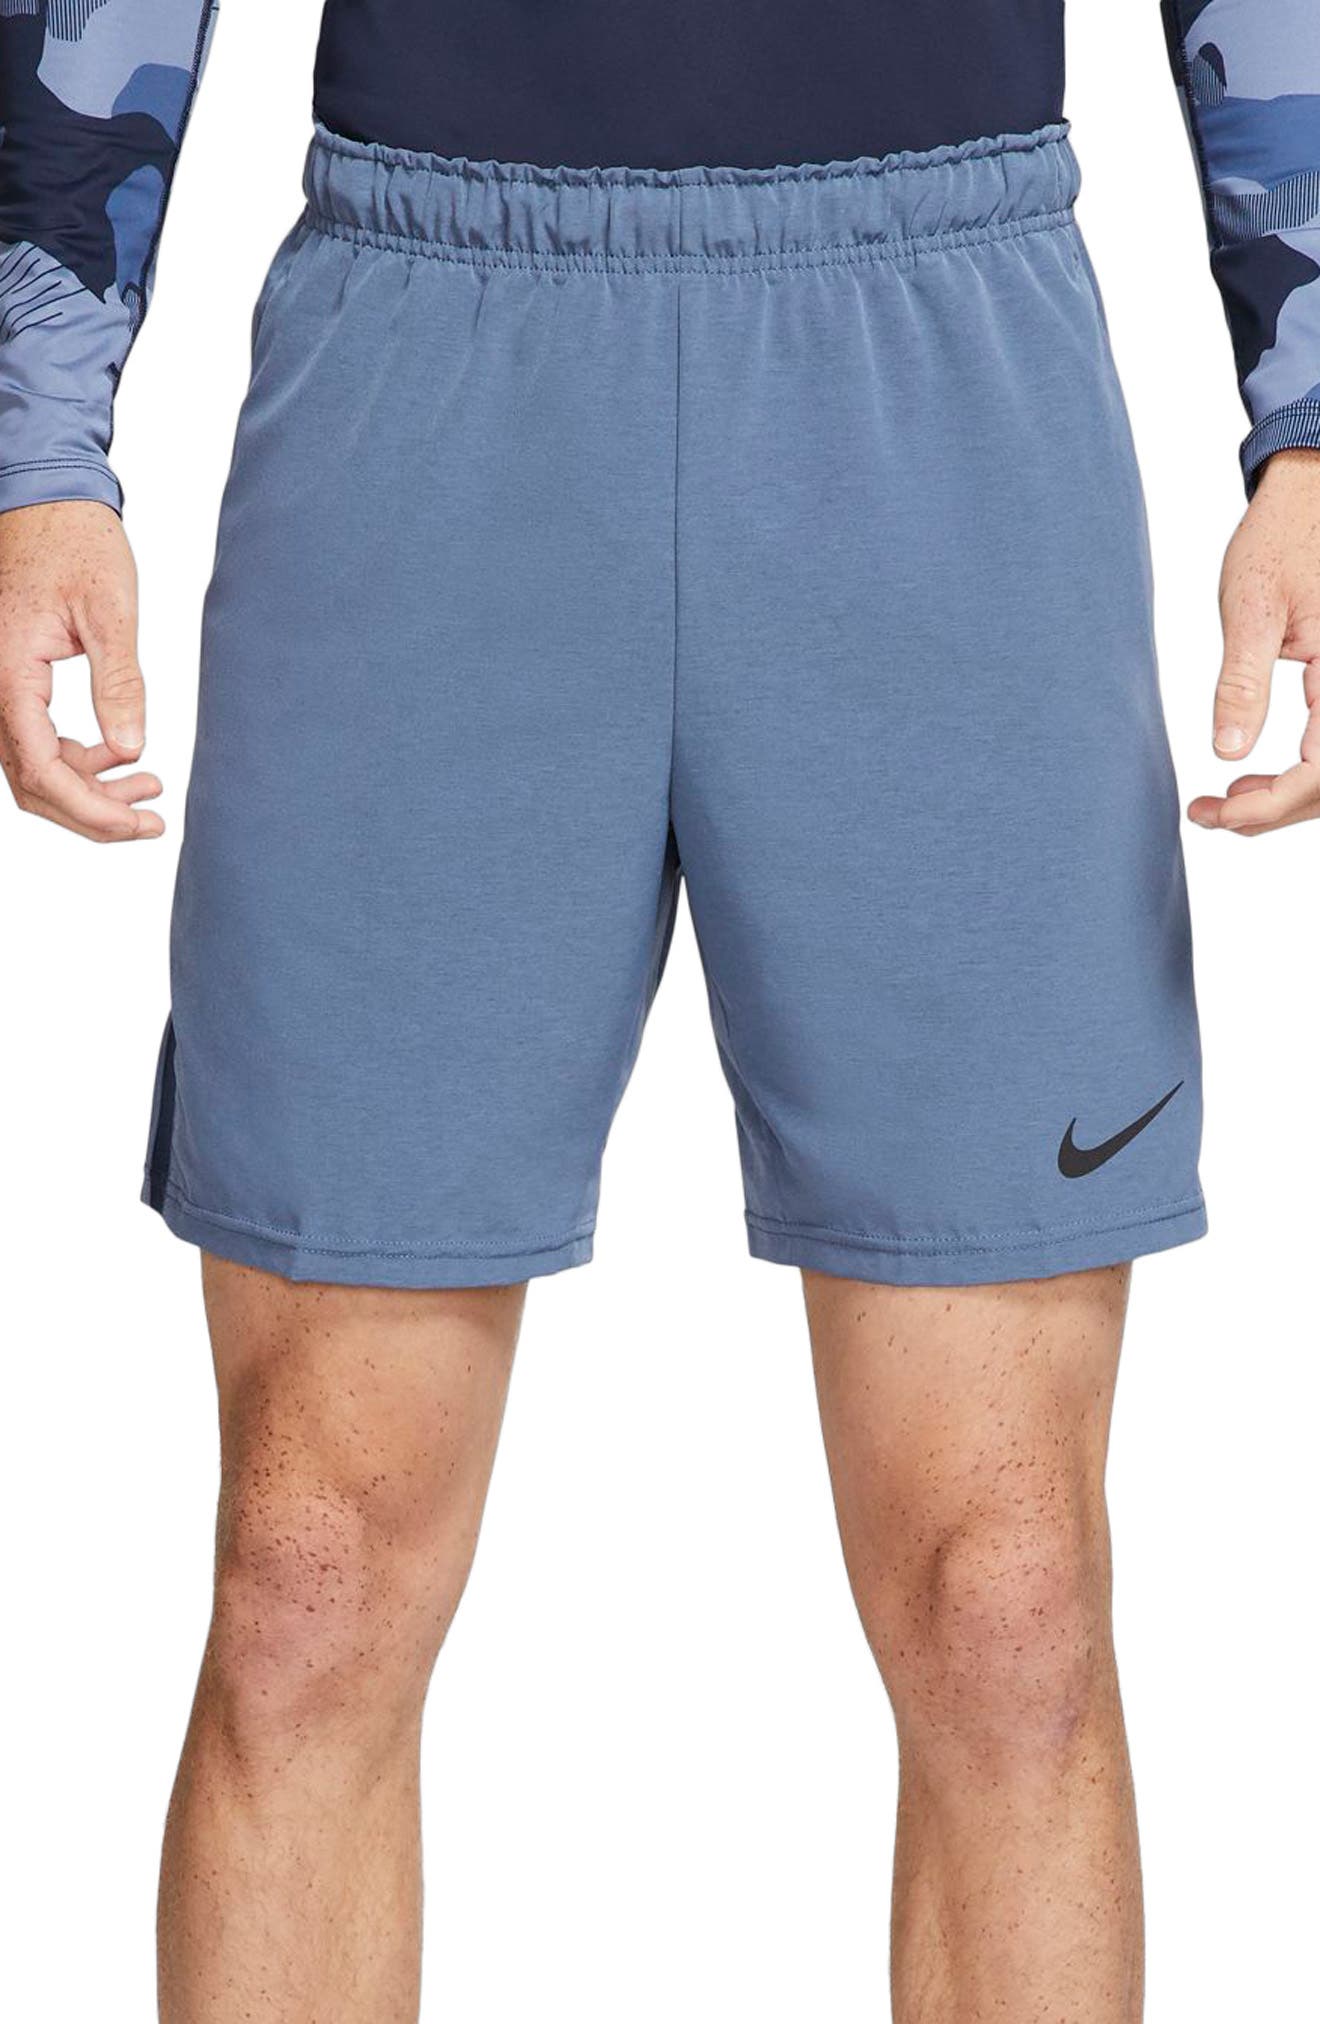 nordstrom nike shorts